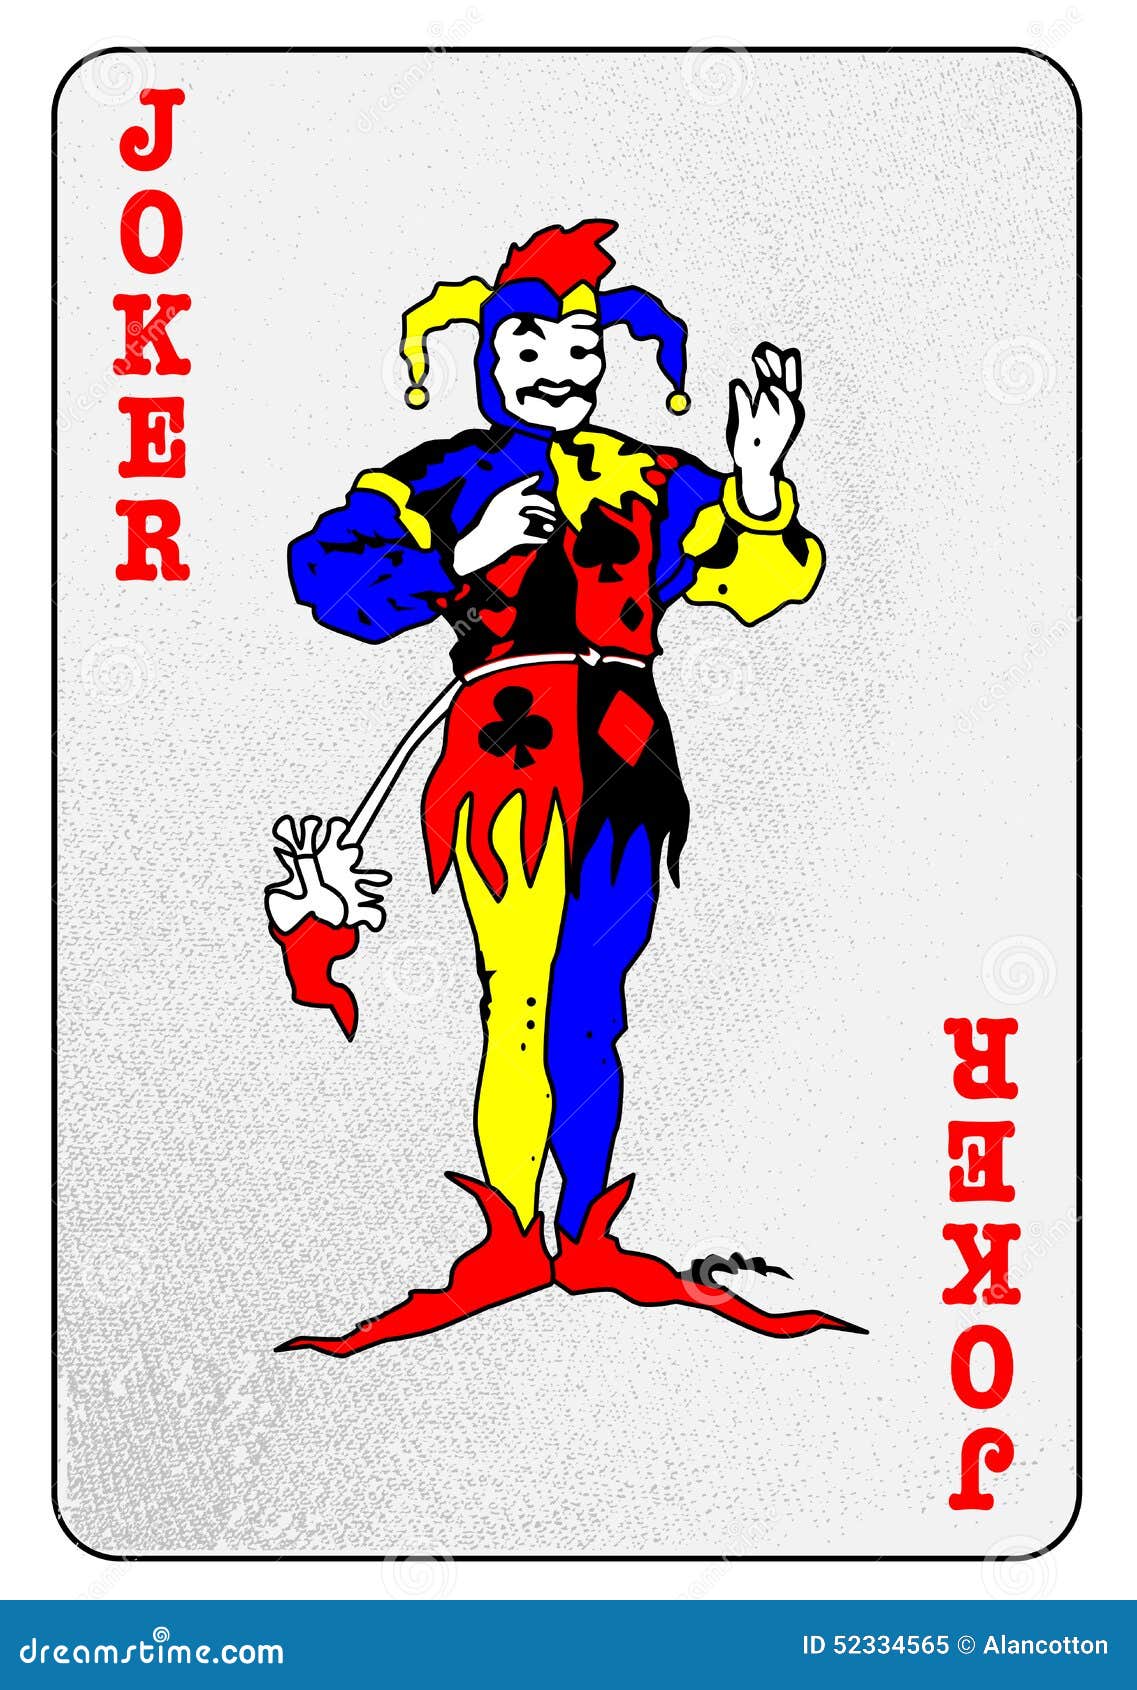 The Joker Card stock illustration. Illustration of cards - 52334565